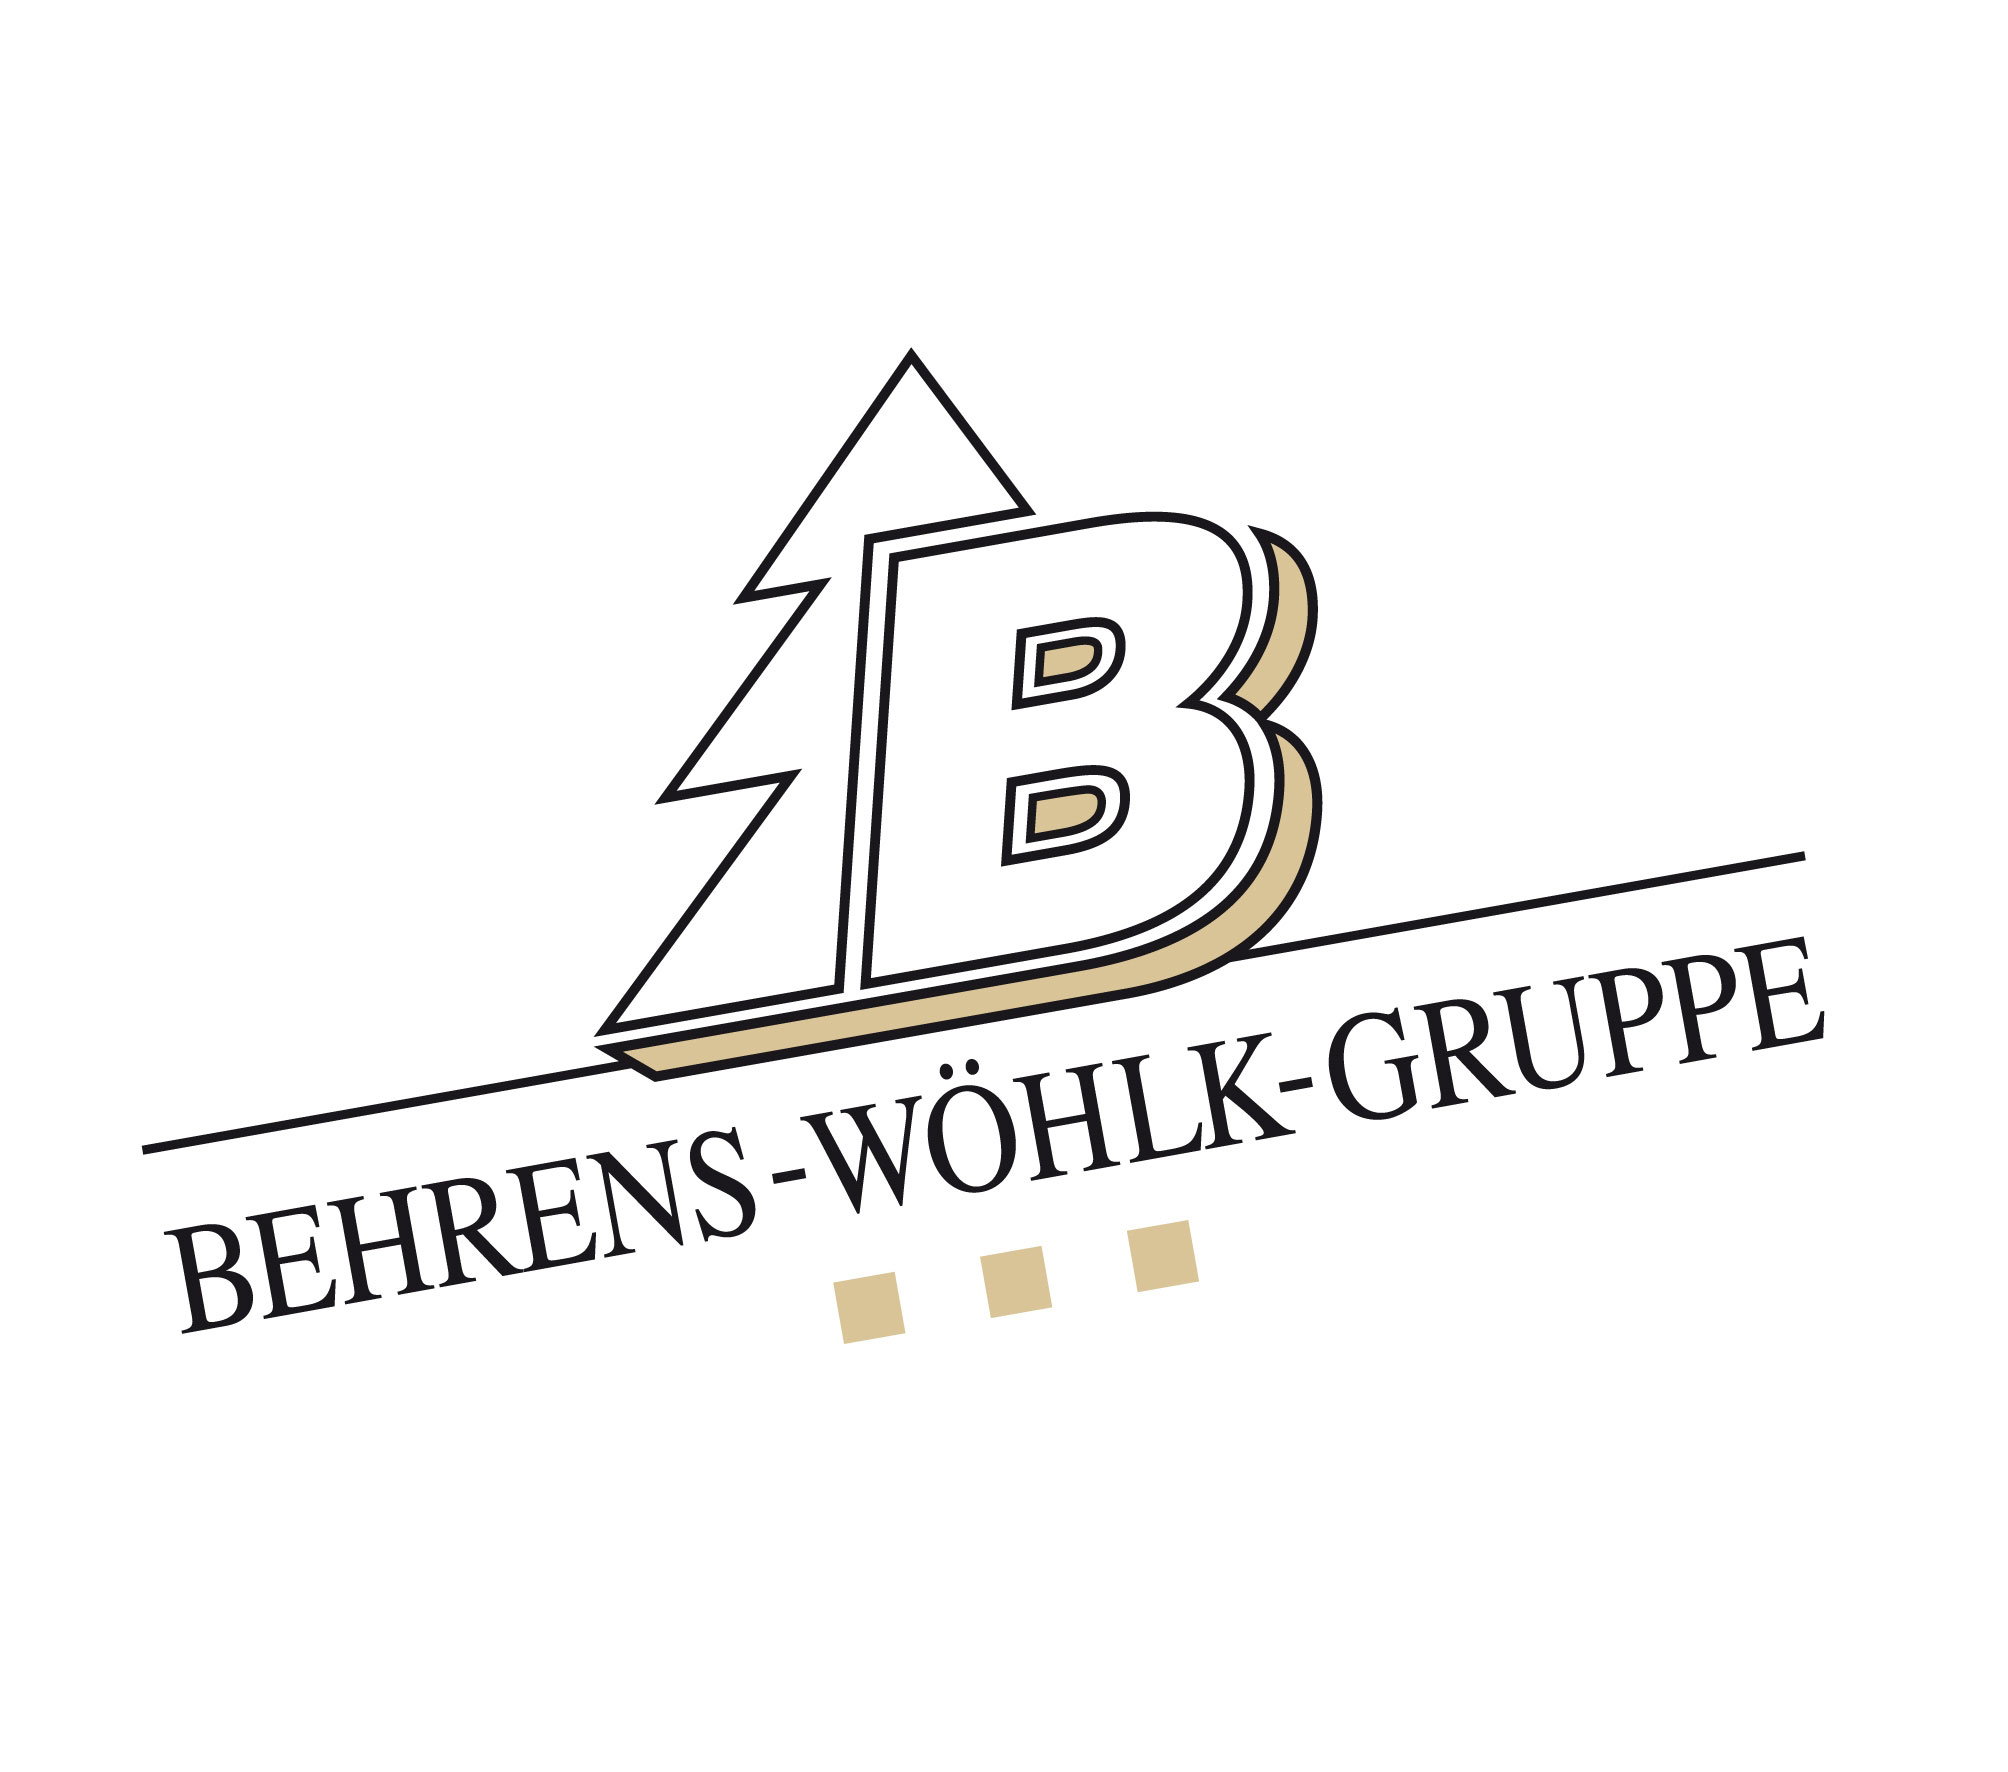 Behrens-Wöhlk